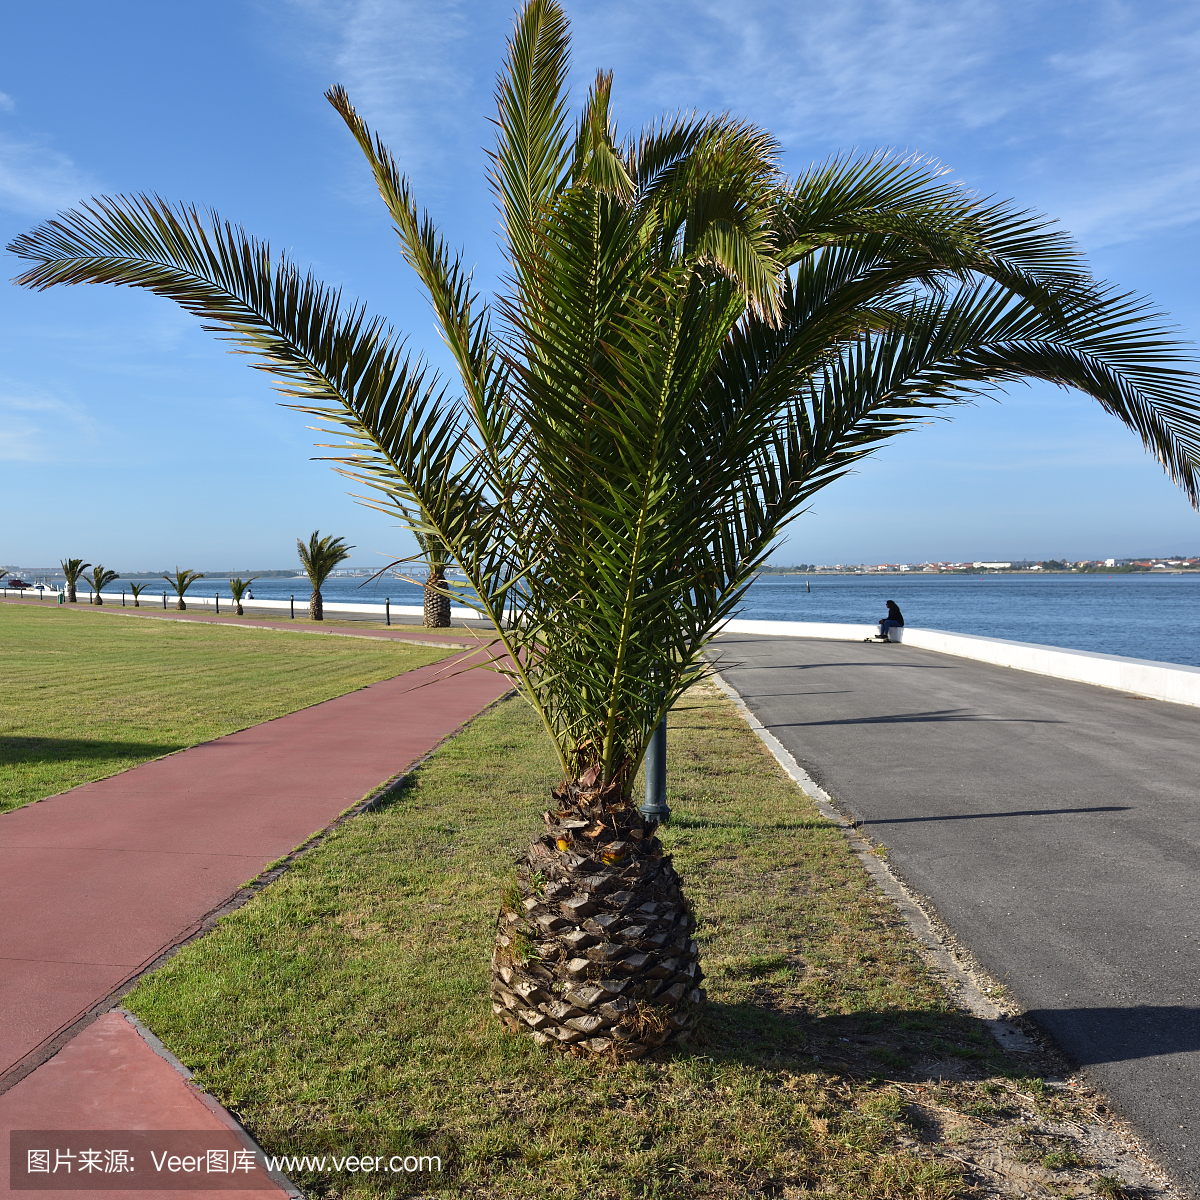 Palm tree in Costa Nova. Portugal